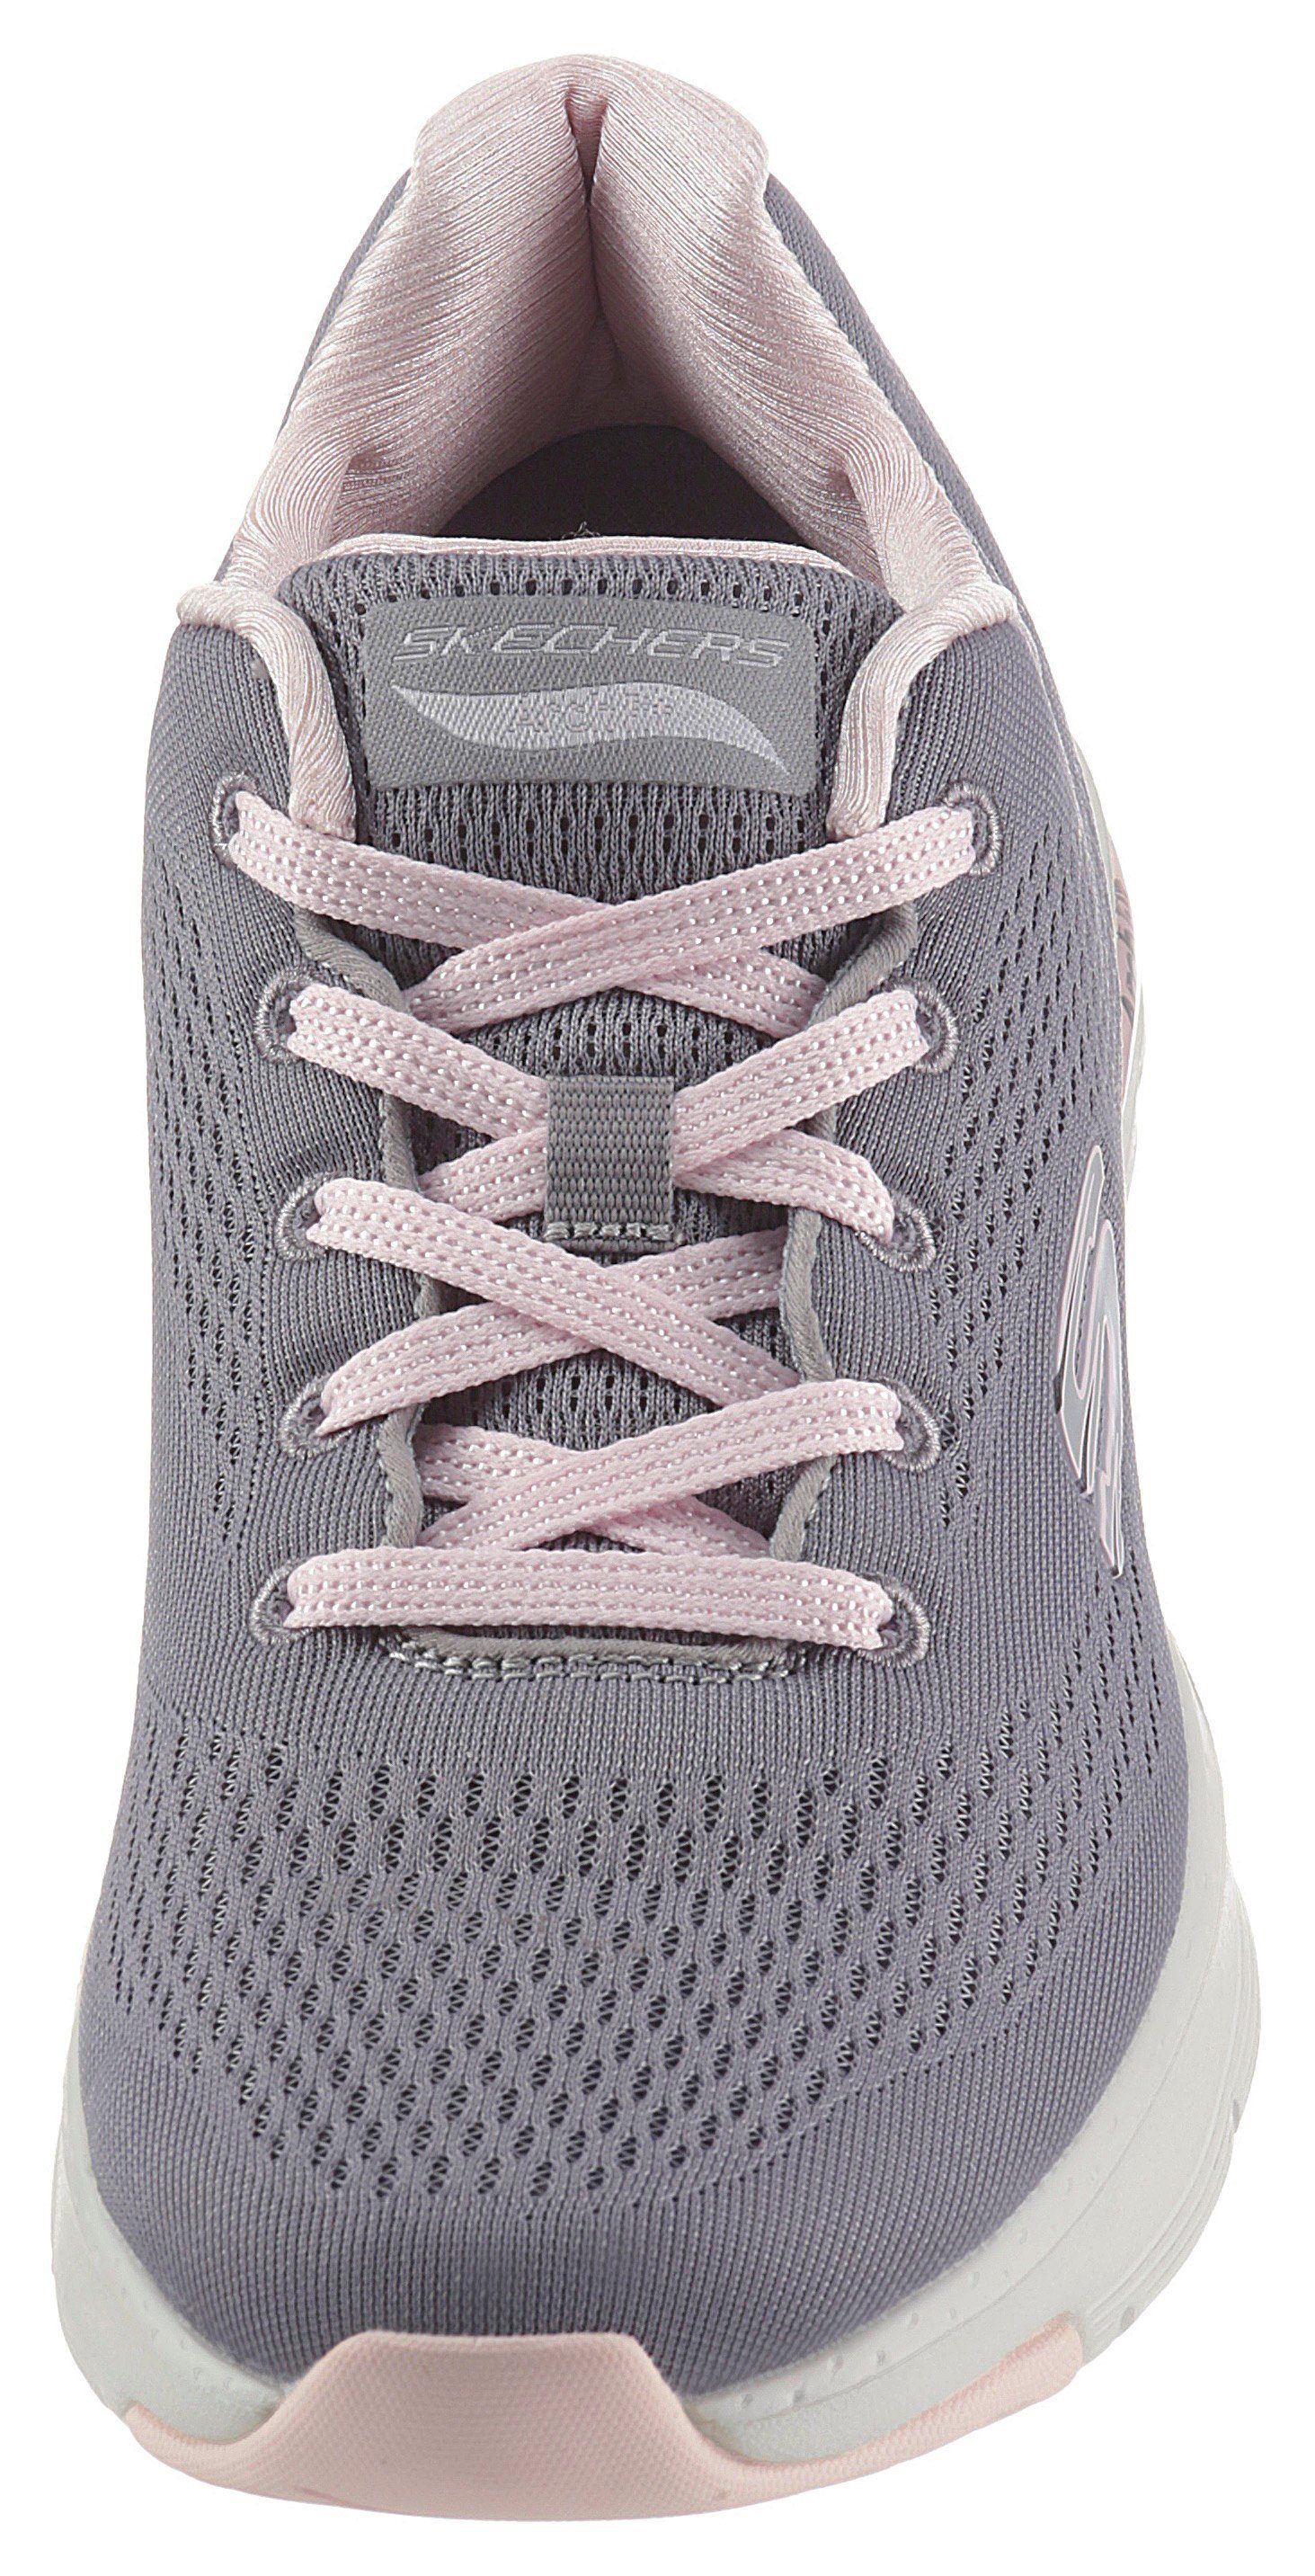 FIT ARCH Logo-Emblem grau-rosa seitlichem Sneaker Skechers mit